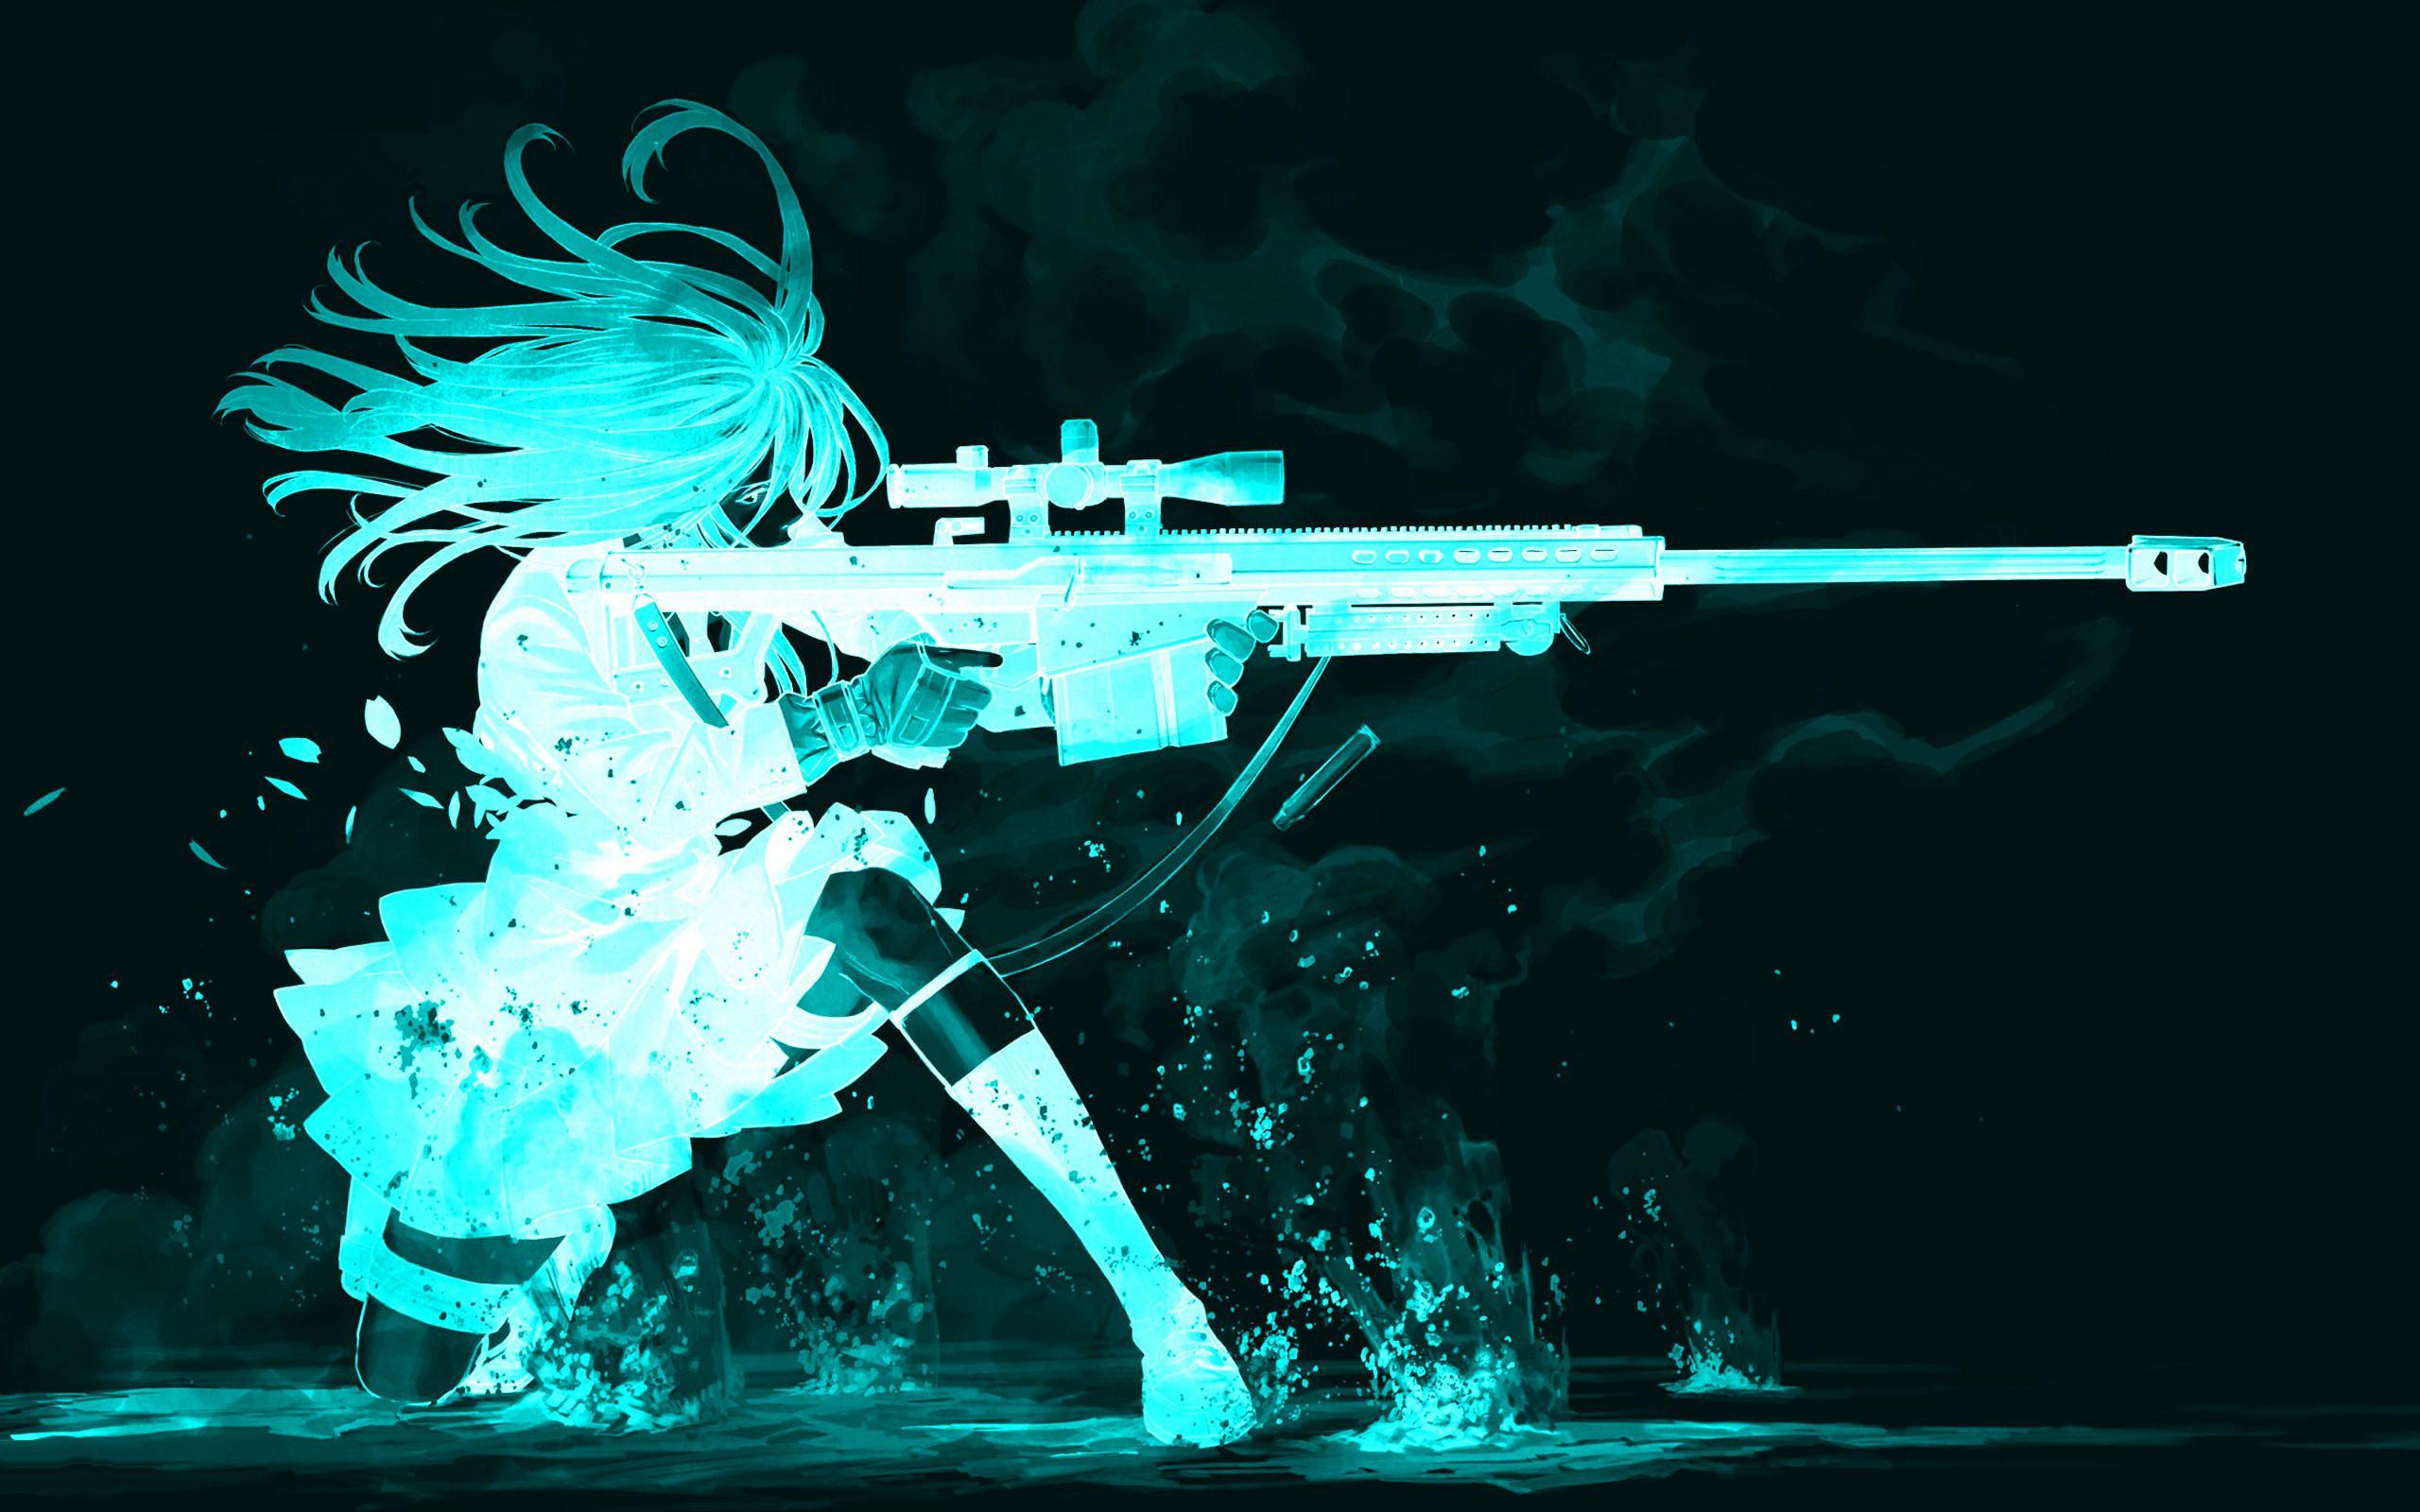 Anime Gunshot Sound 2 | Soundeffects Wiki | Fandom